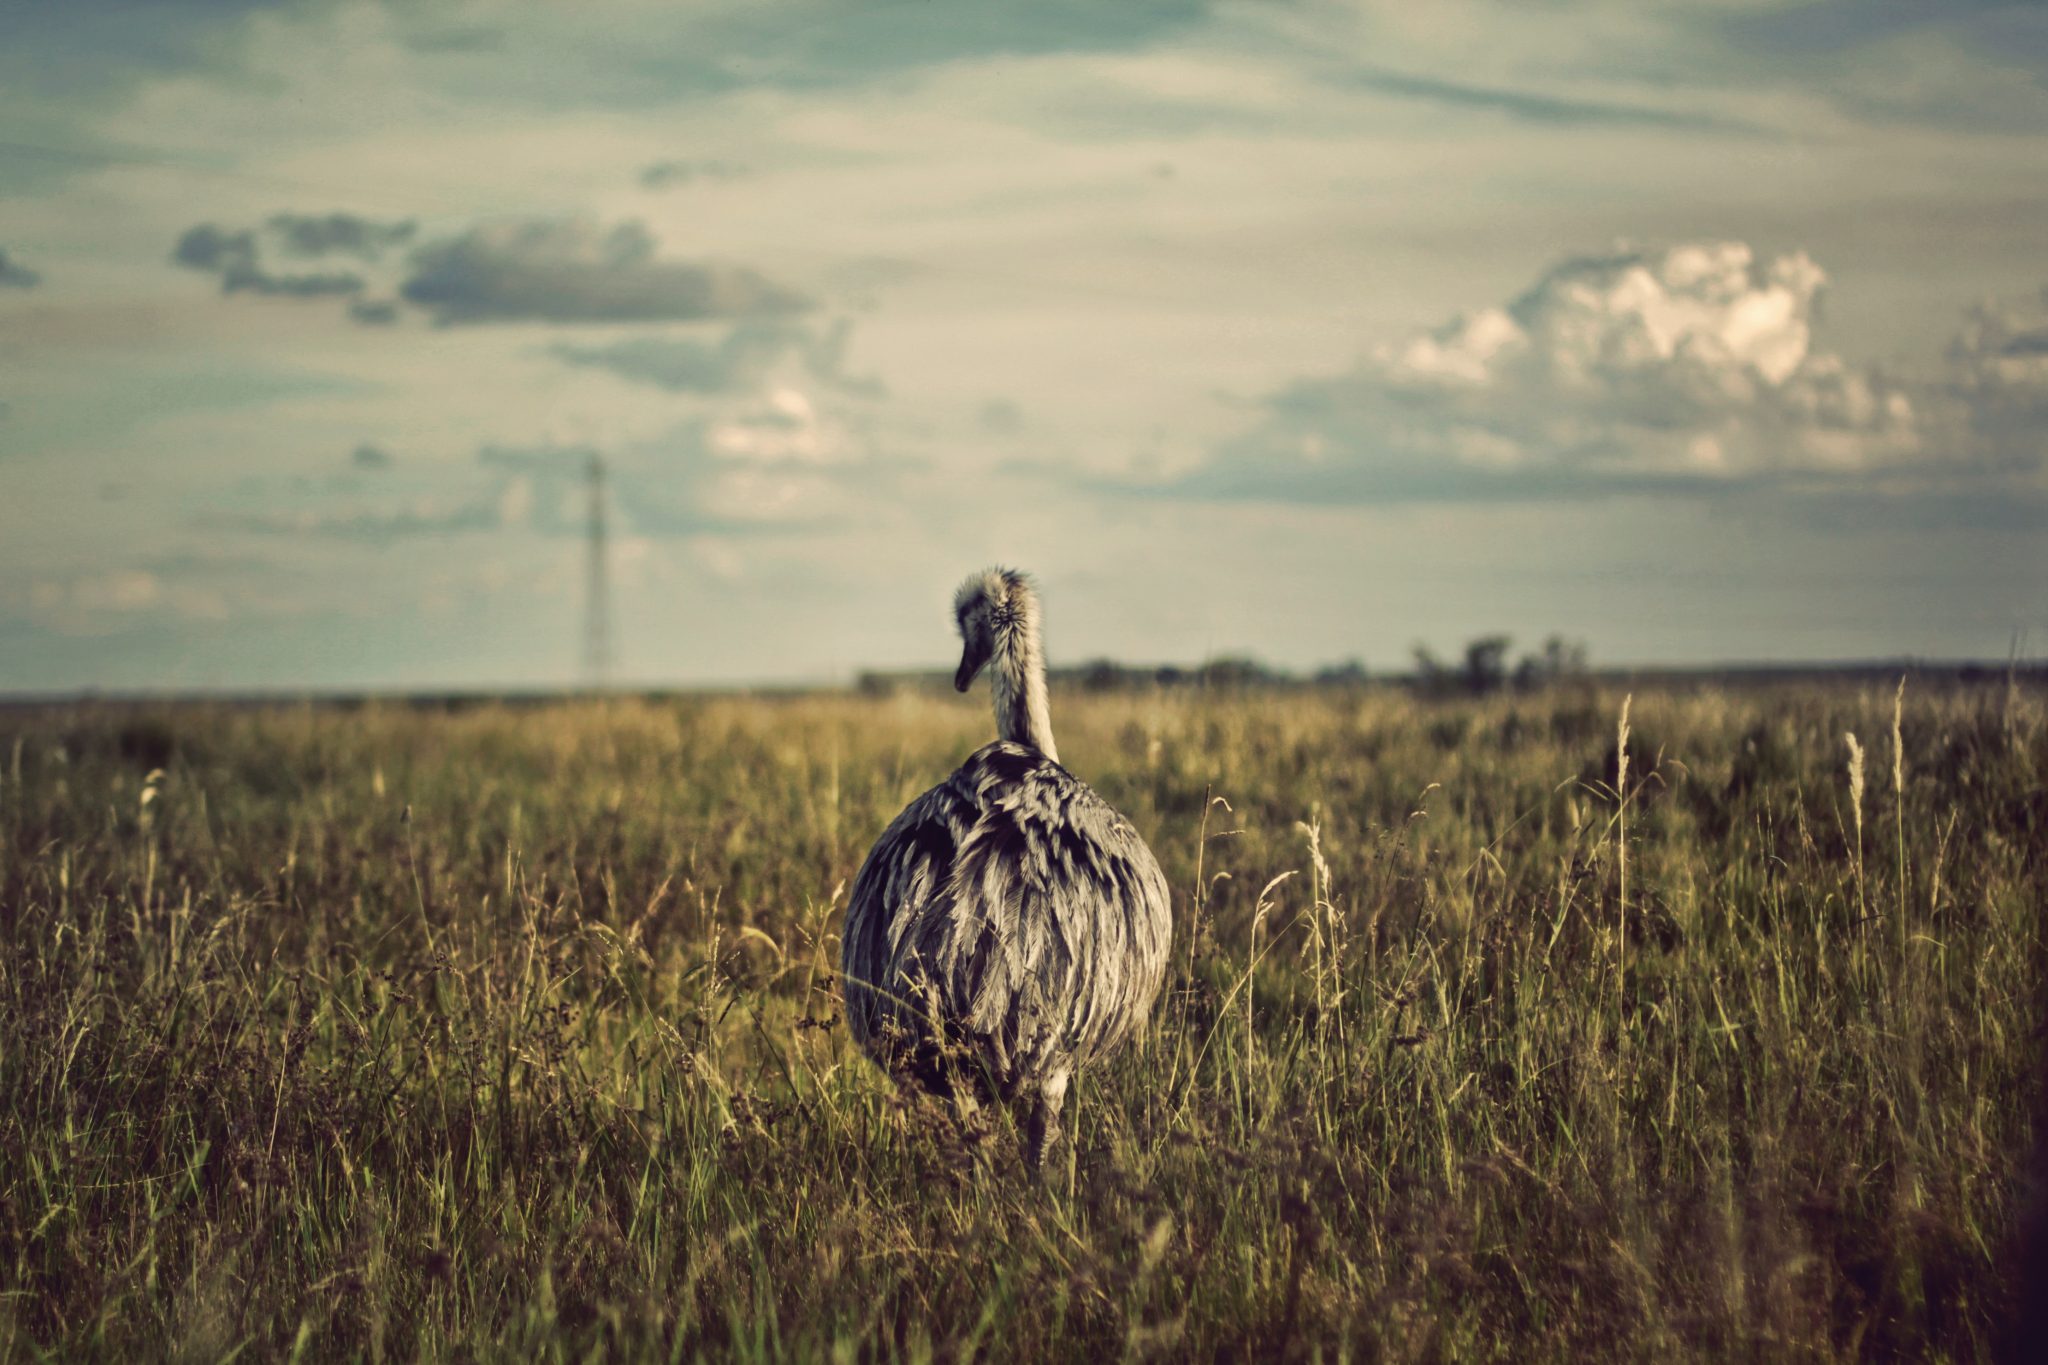 Image of Emu bird strolling through the grass. Photo courtesy of ariana-prestes-4589-unsplash.com